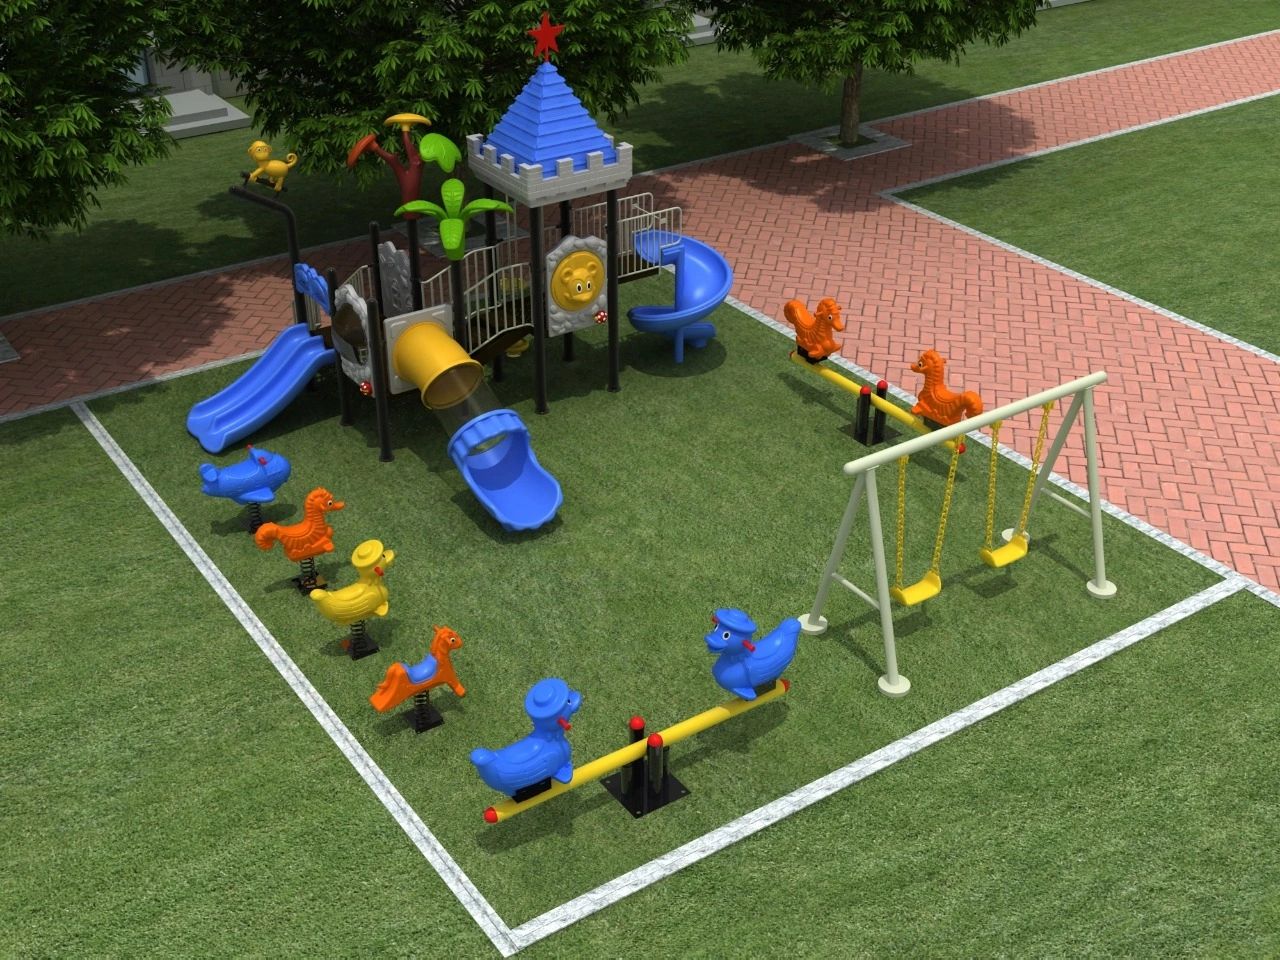 Normativa de seguridad para parques infantiles exteriores